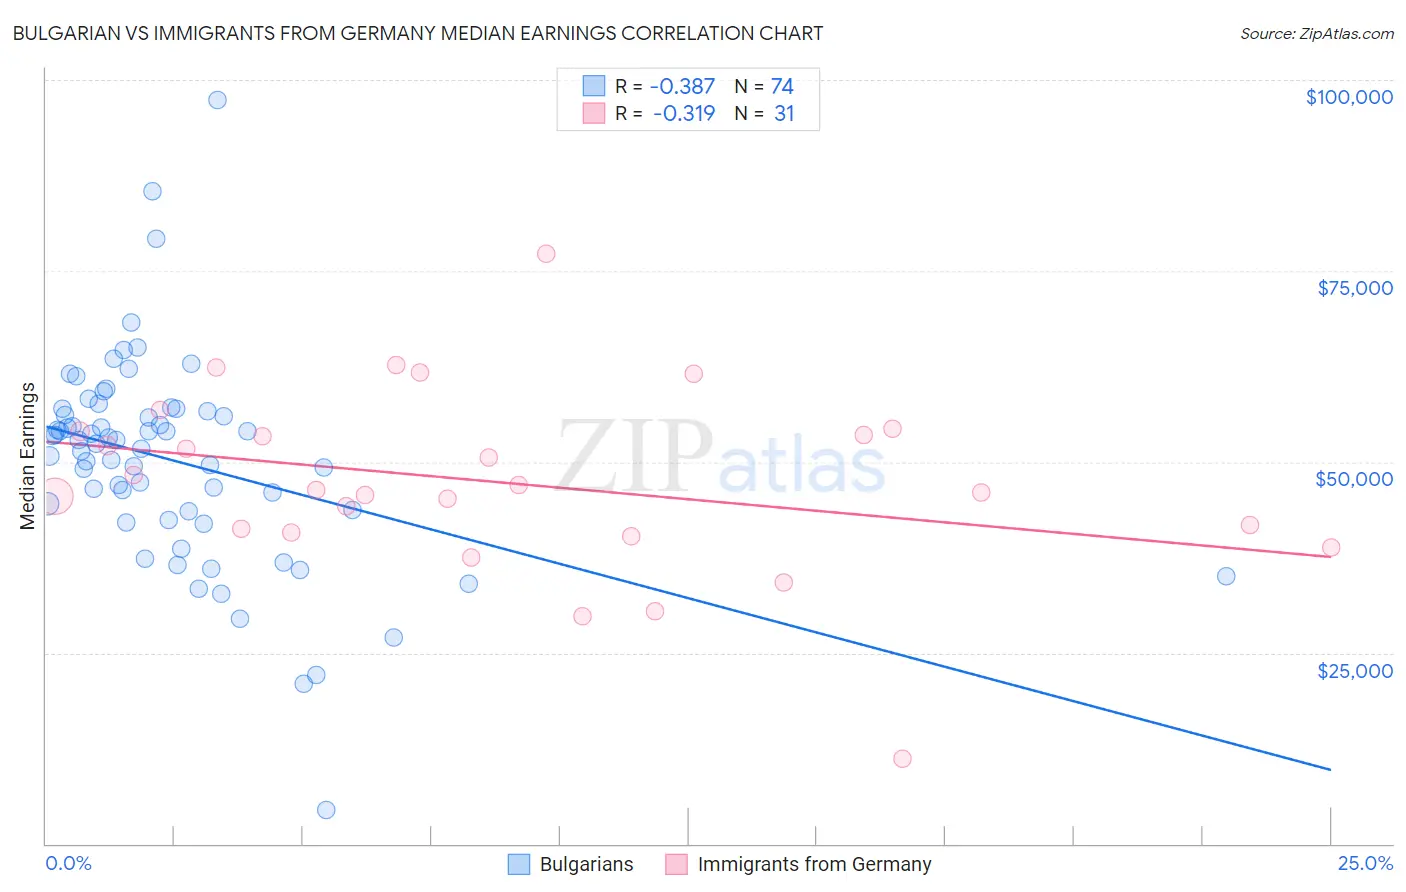 Bulgarian vs Immigrants from Germany Median Earnings